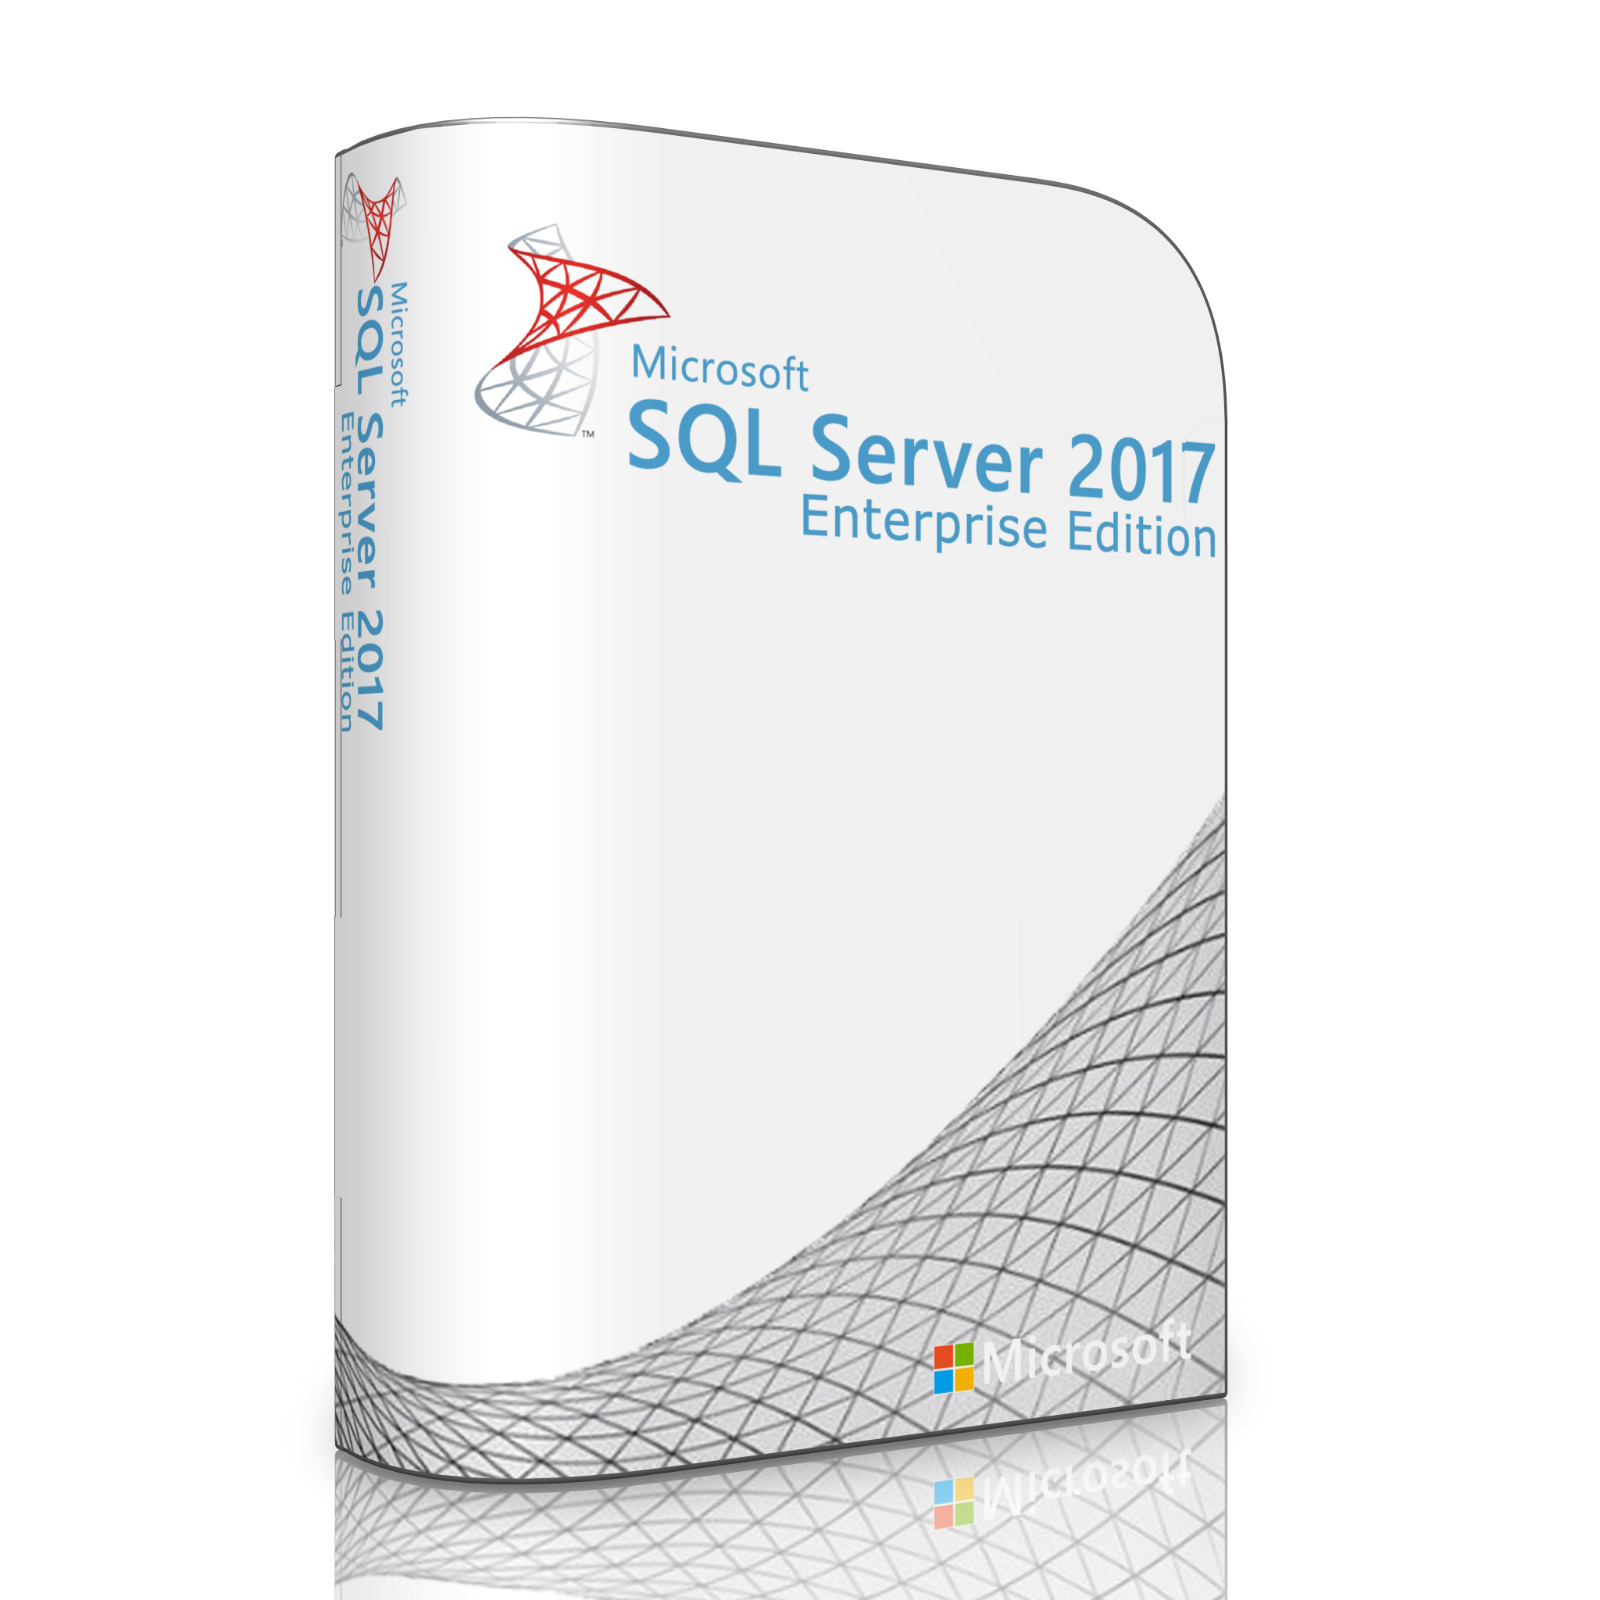 Microsoft SQL Server 2017 Enterprise with 48 Core License, unlimited User CALs